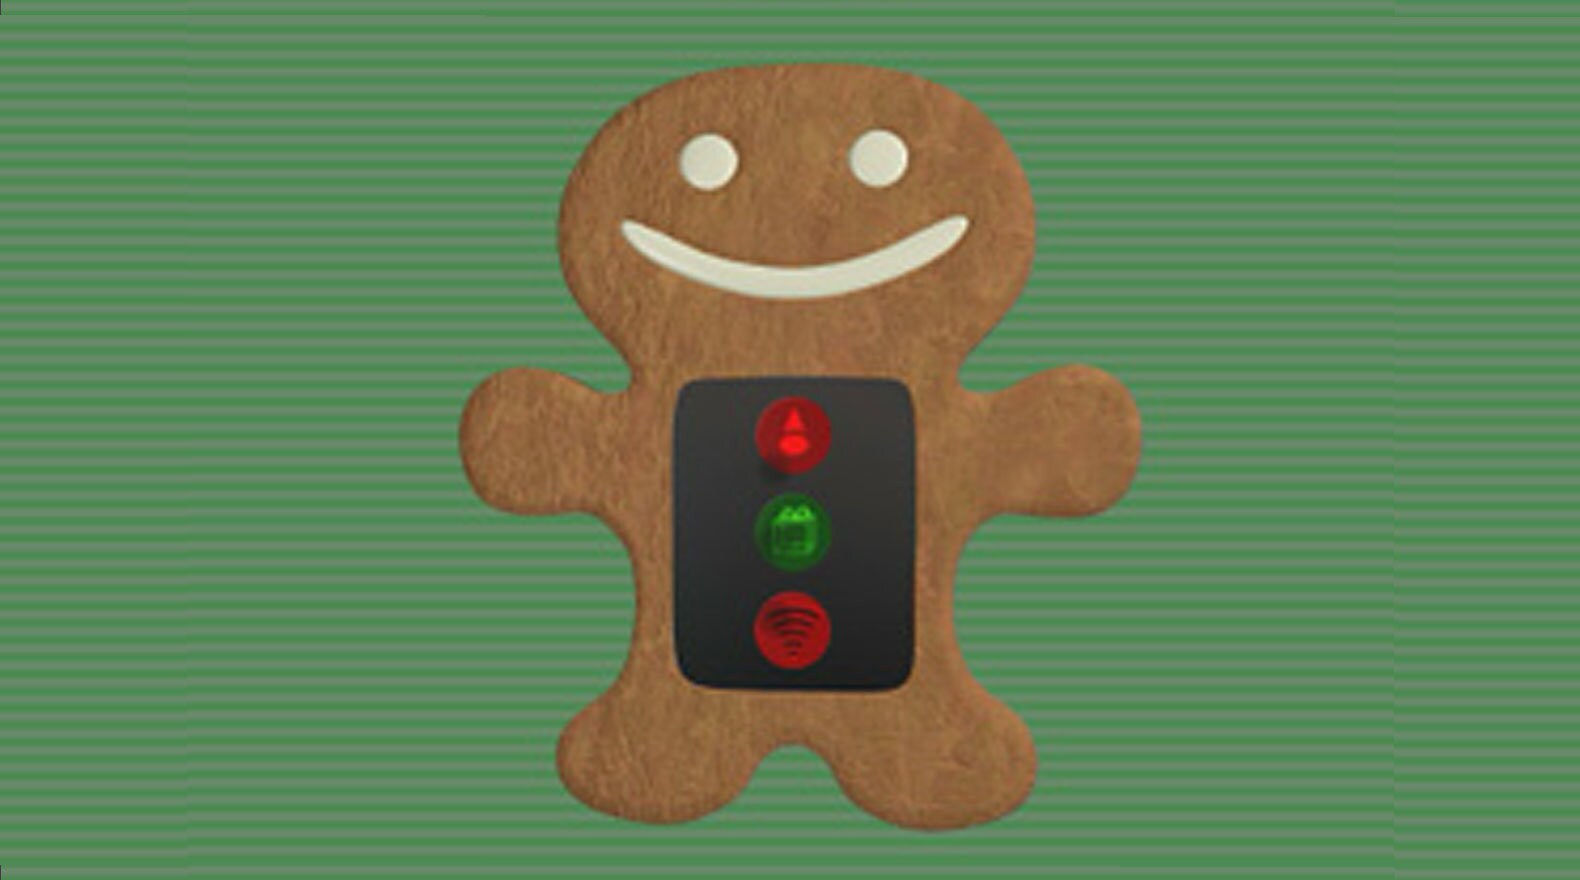 Gingerbread Man from "Prep & Landing"